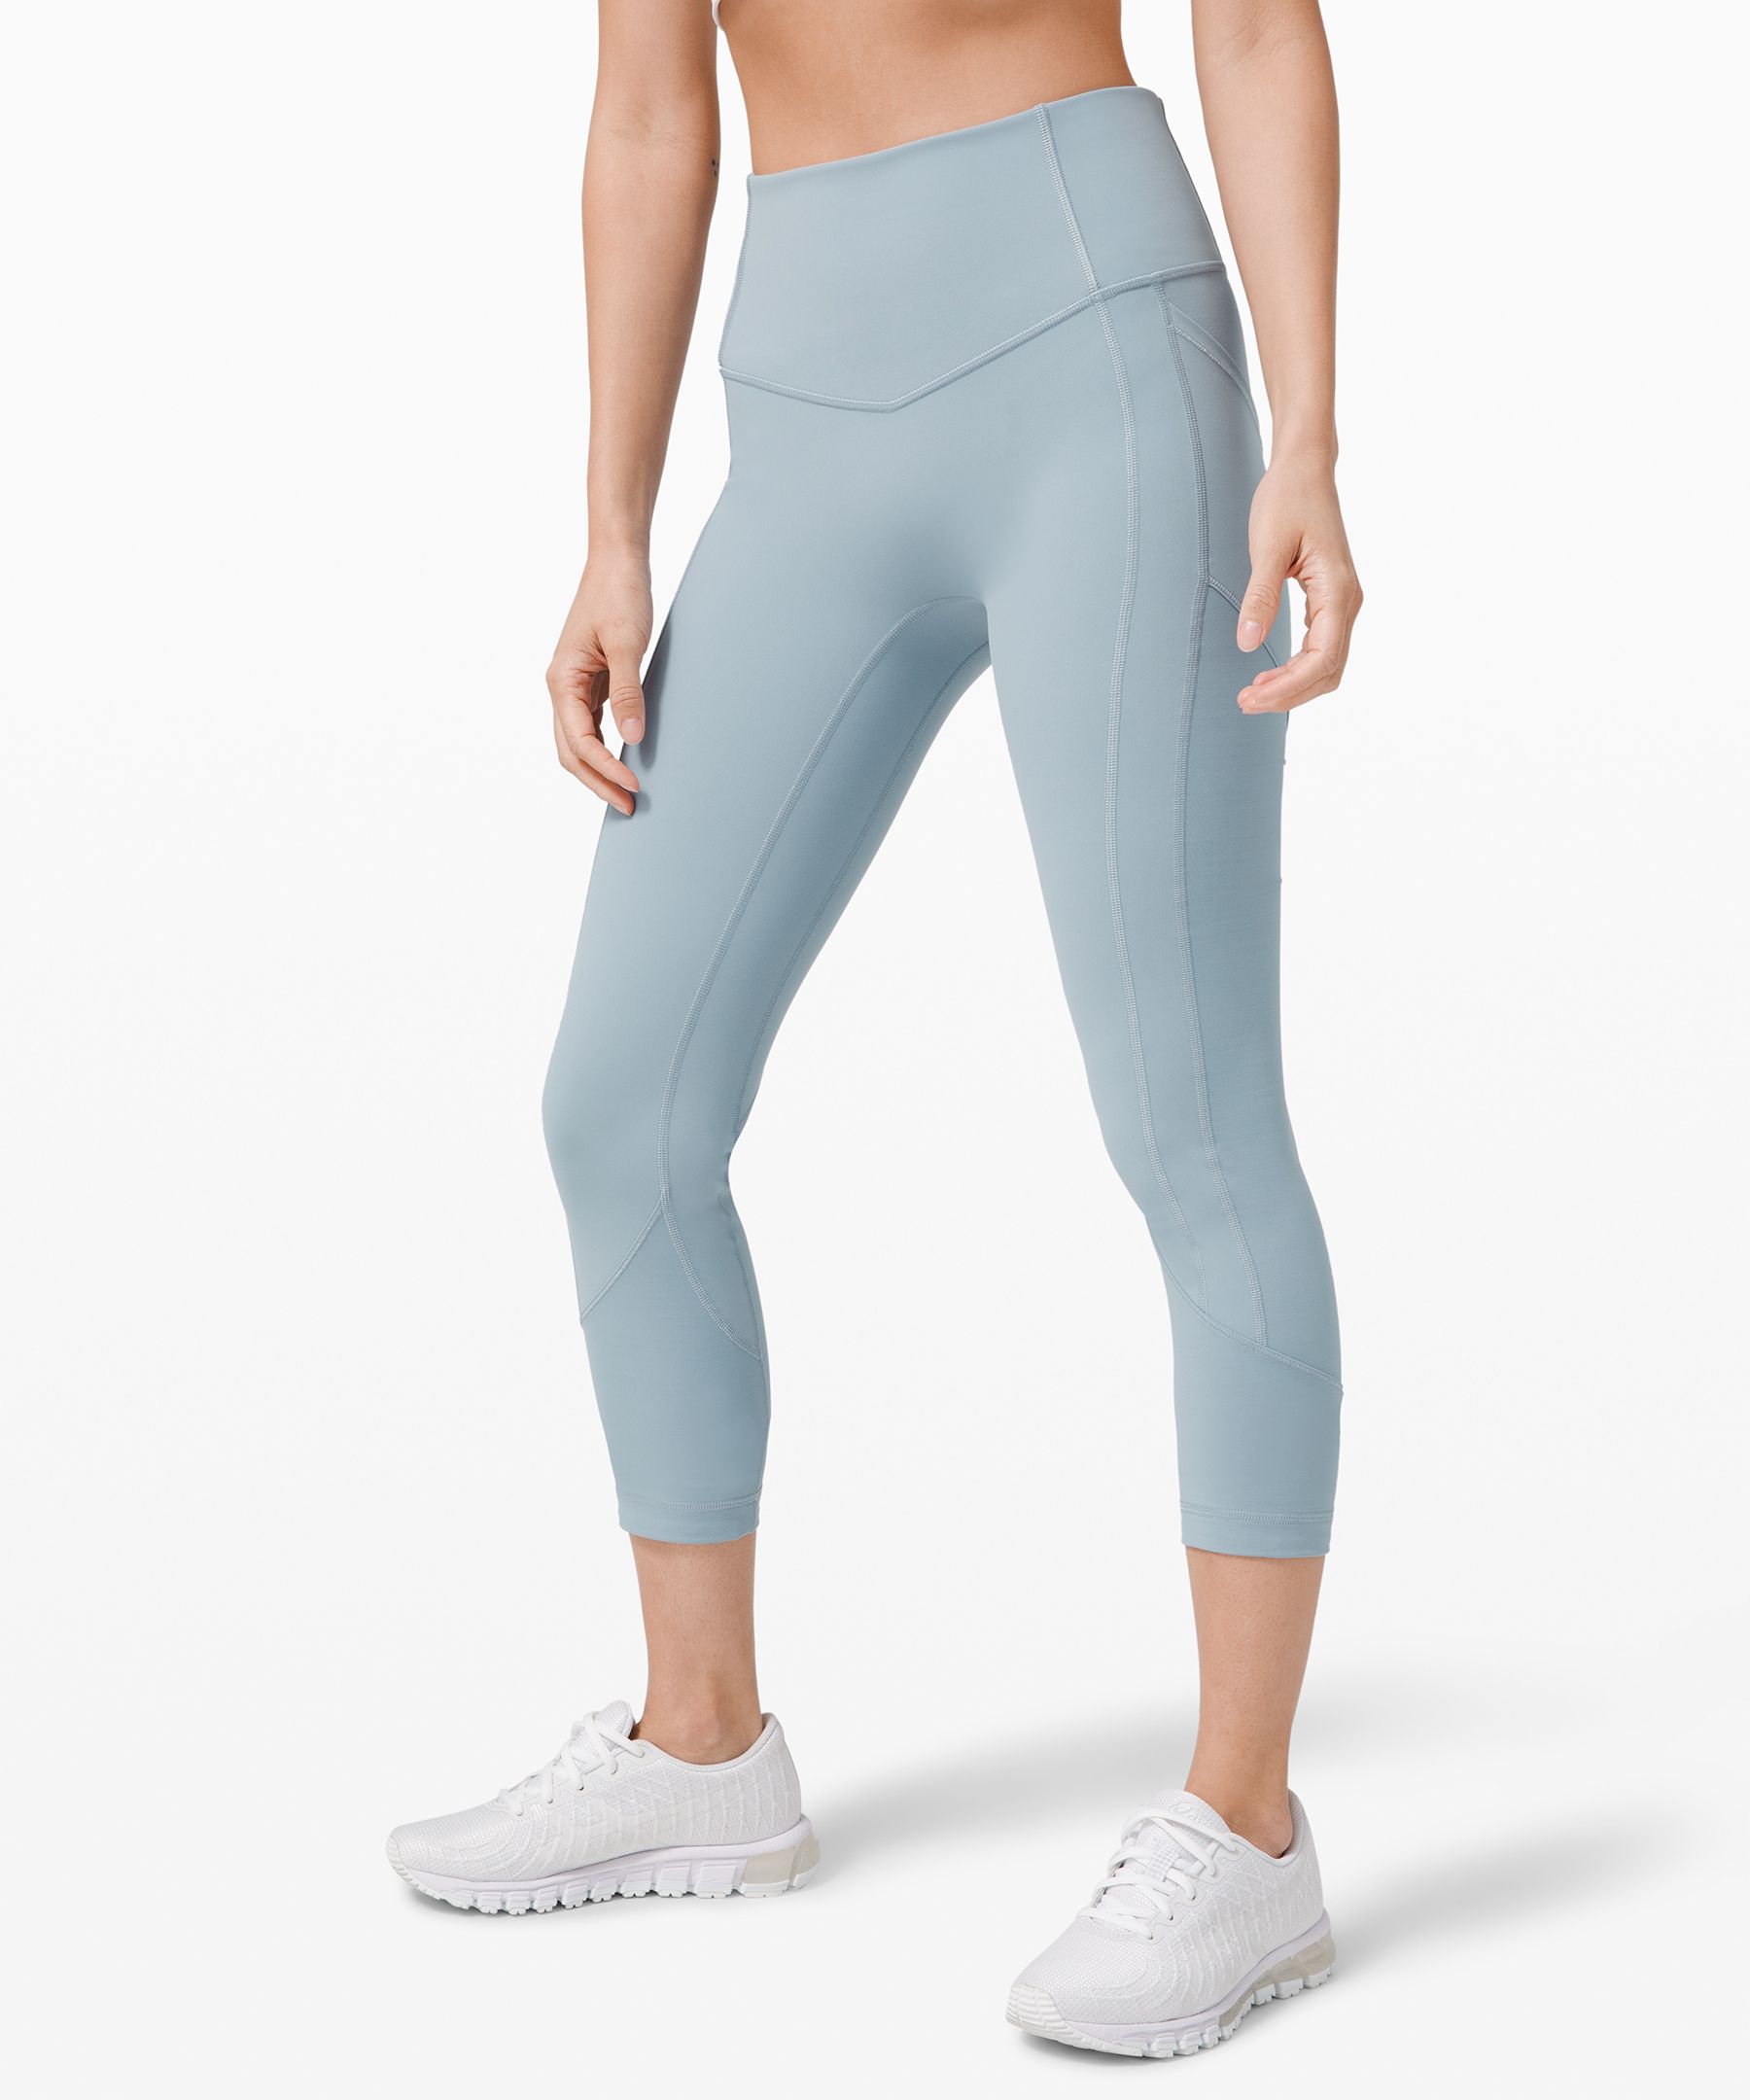 discount wholesale online NWT Lululemon Align HR Pants 25” Side Pockets on Leggings  Size 8 Pastel Blue